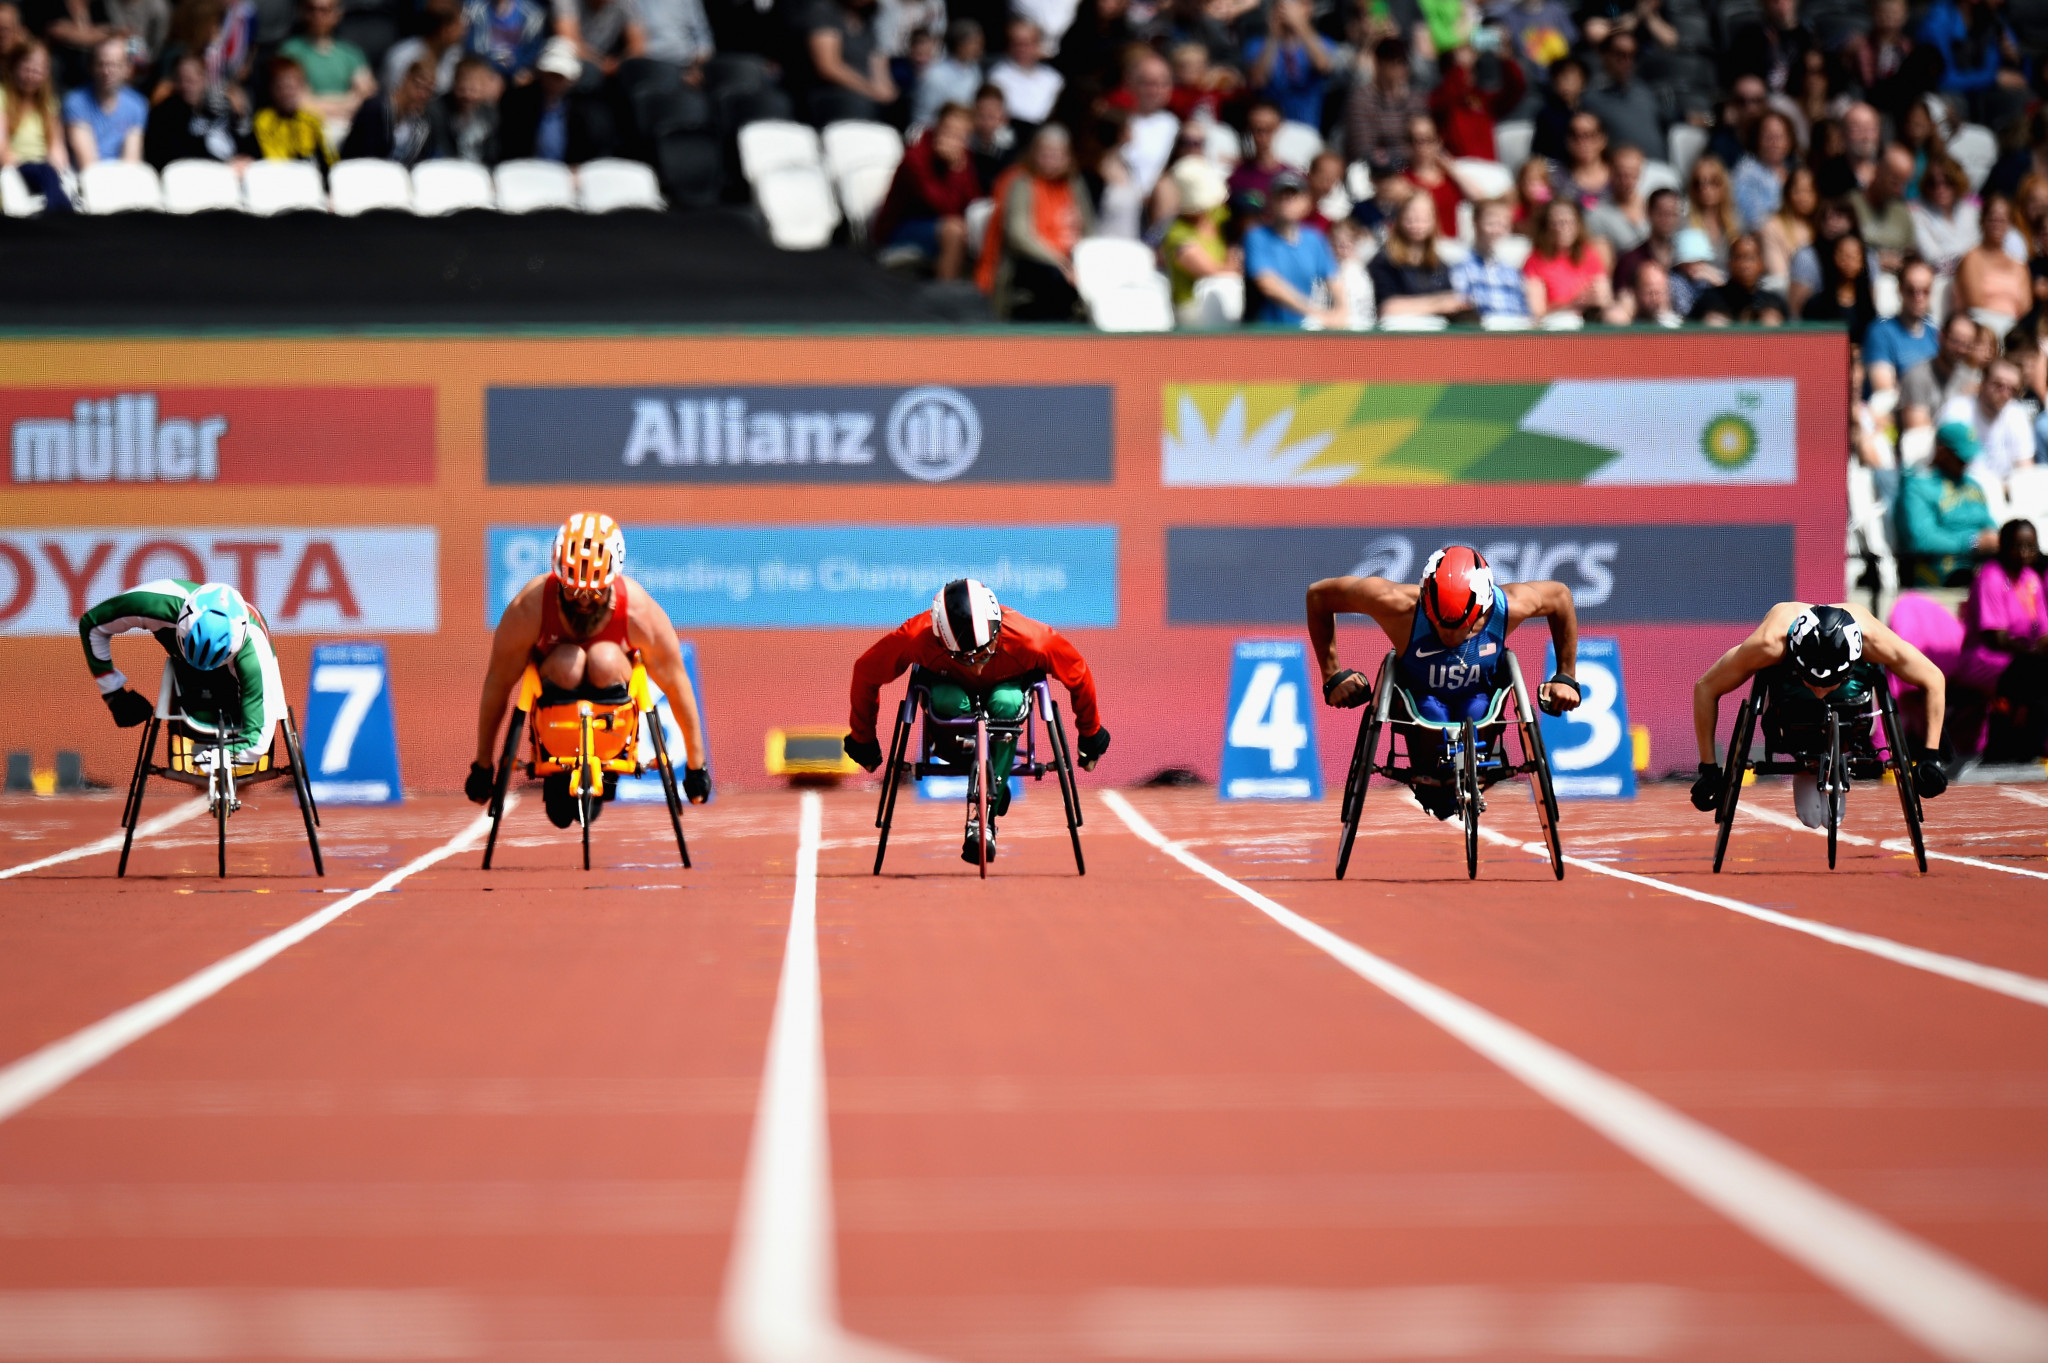 World Para Athletics confirms postponement of Kobe 2022 World Championships